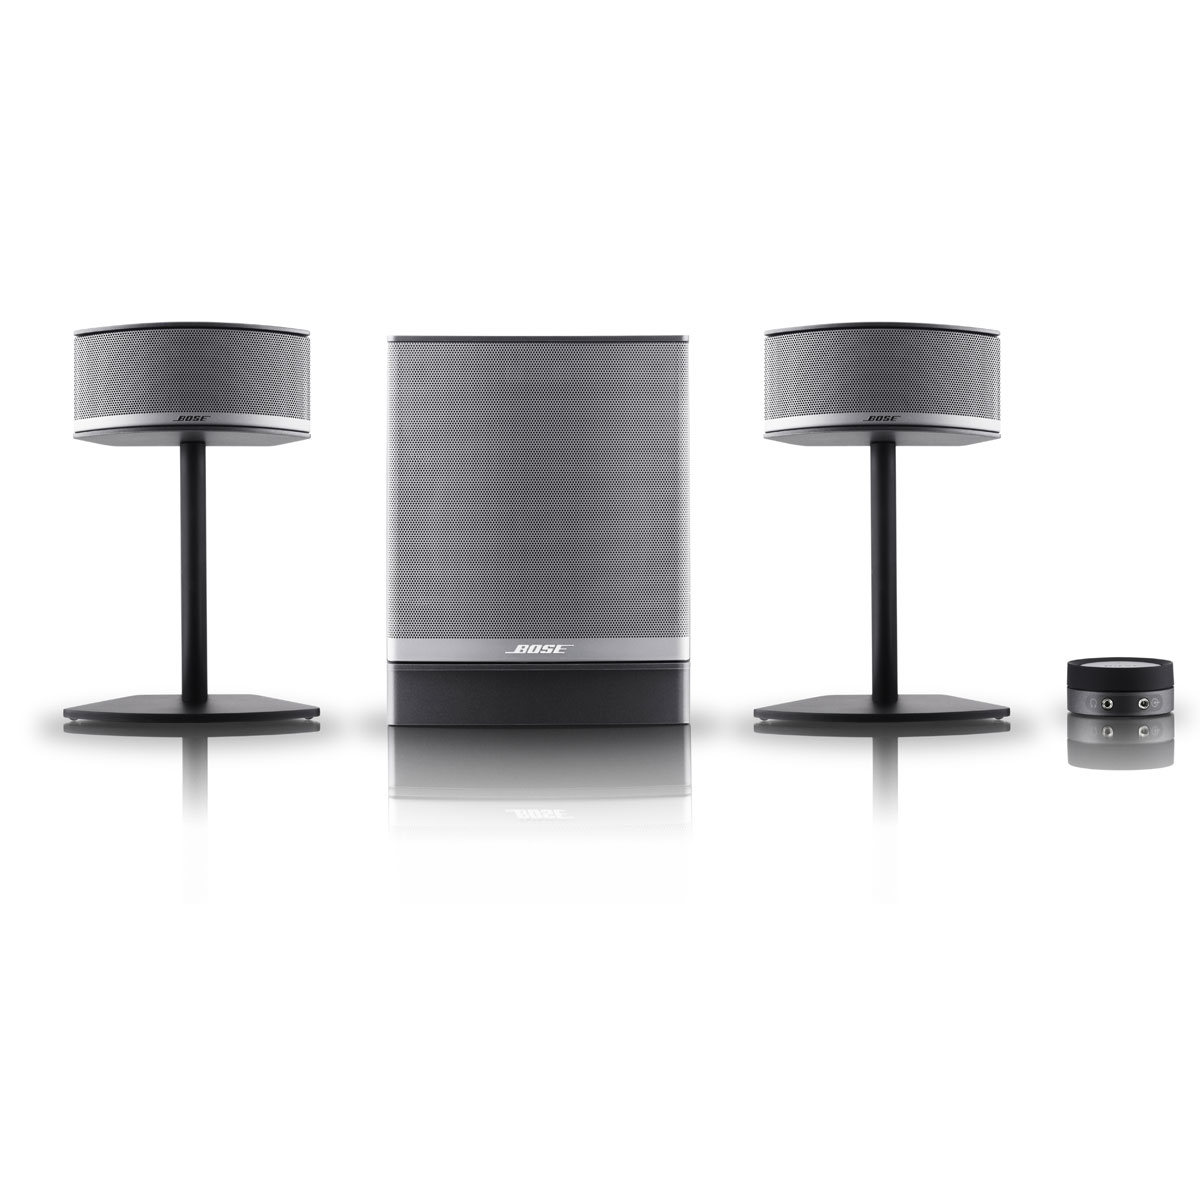 Bose COMPANION 5 Multimedia Speaker System Delivers